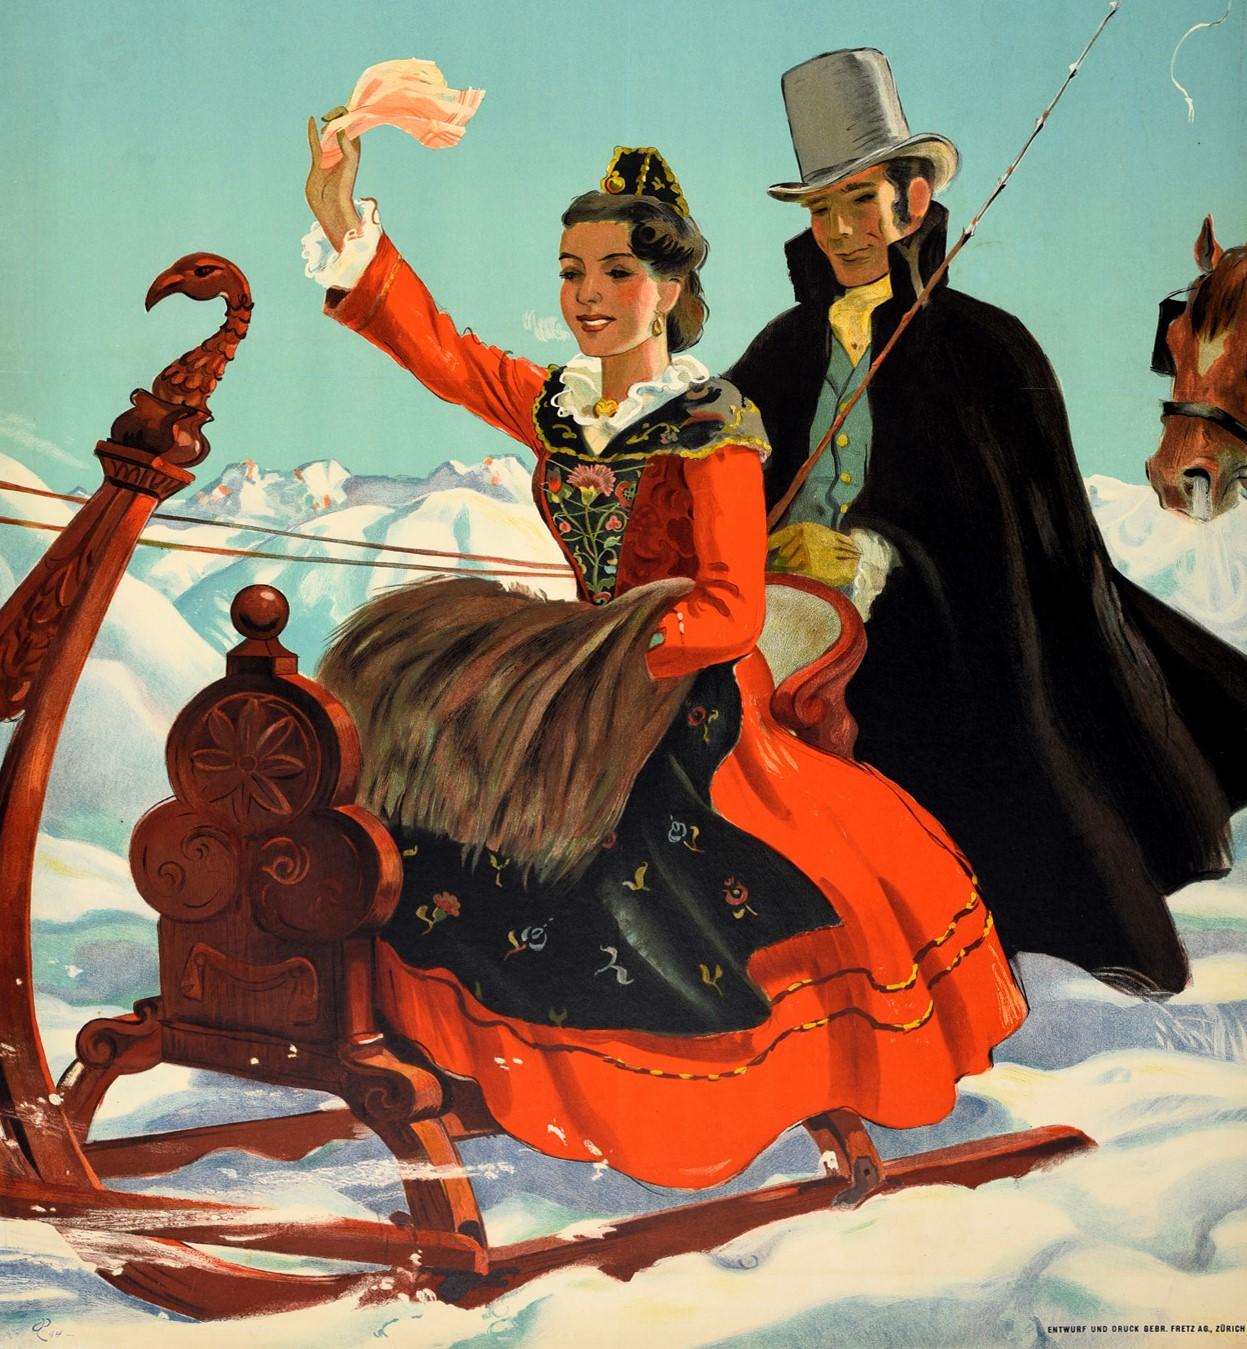 Original Vintage Poster St Moritz Switzerland Swiss Alps Travel Horse Sleigh Art - Print by Hugo Laubi